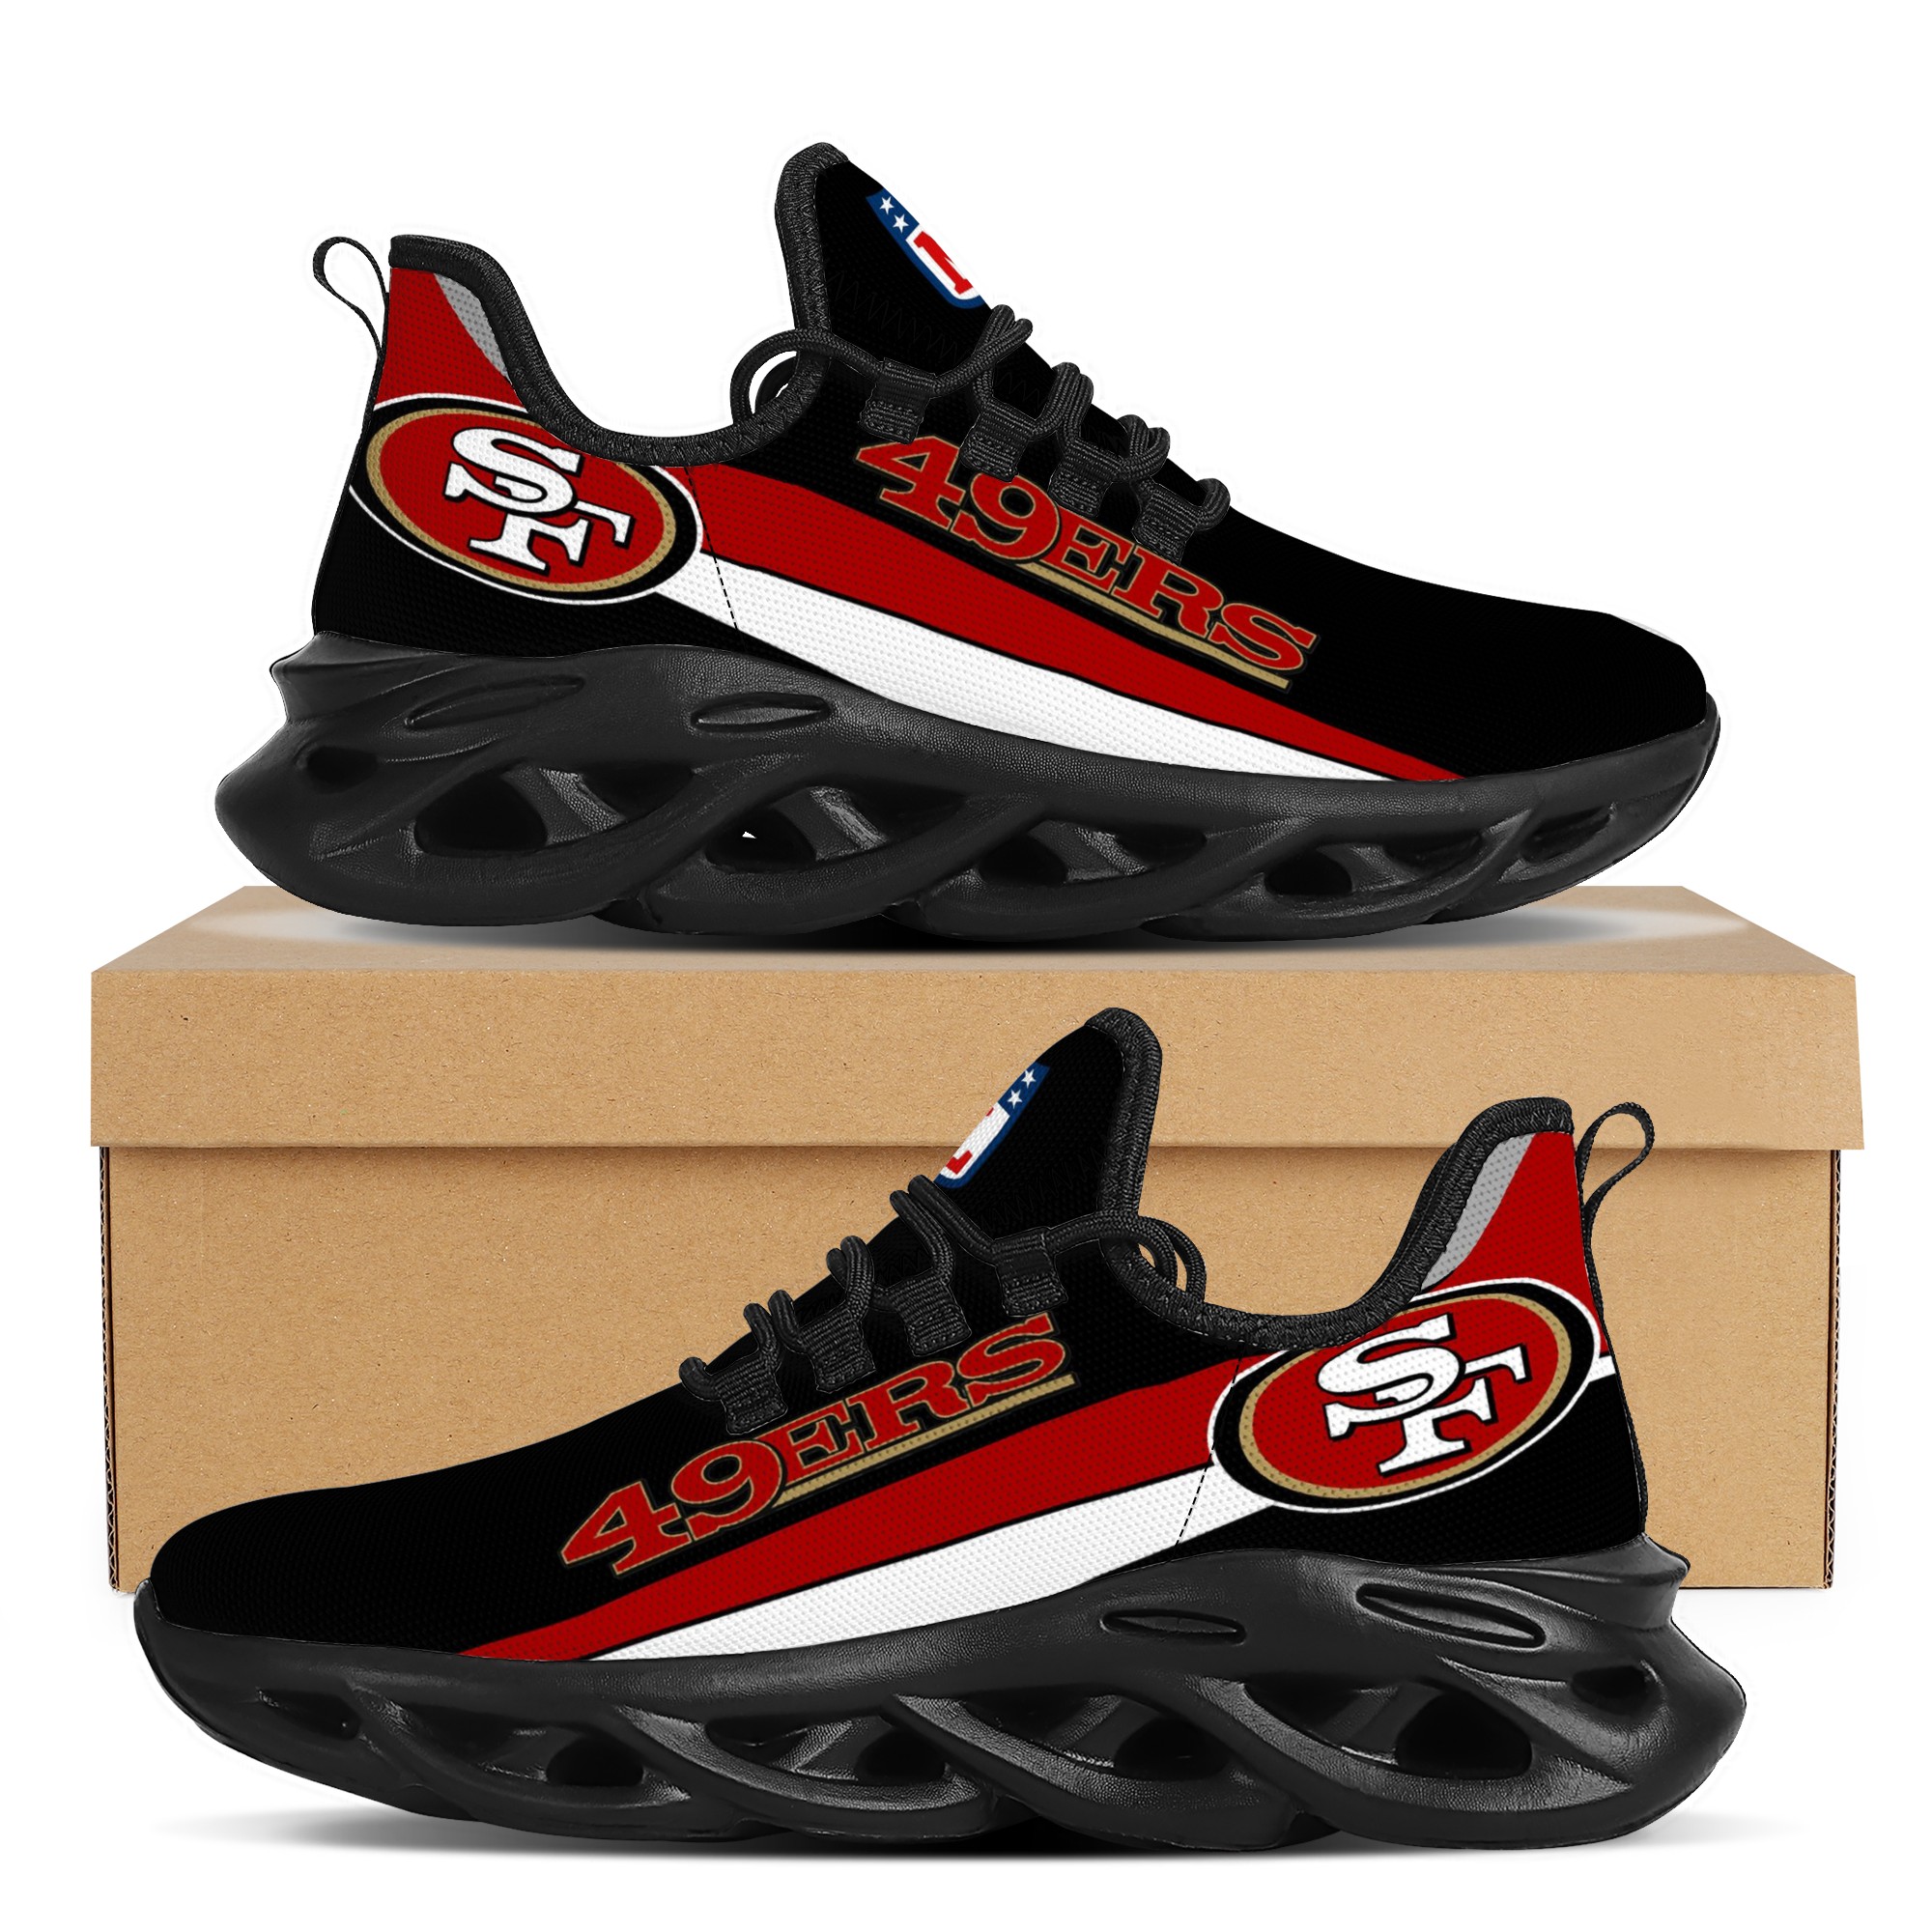 Women's San Francisco 49ers Flex Control Sneakers 003